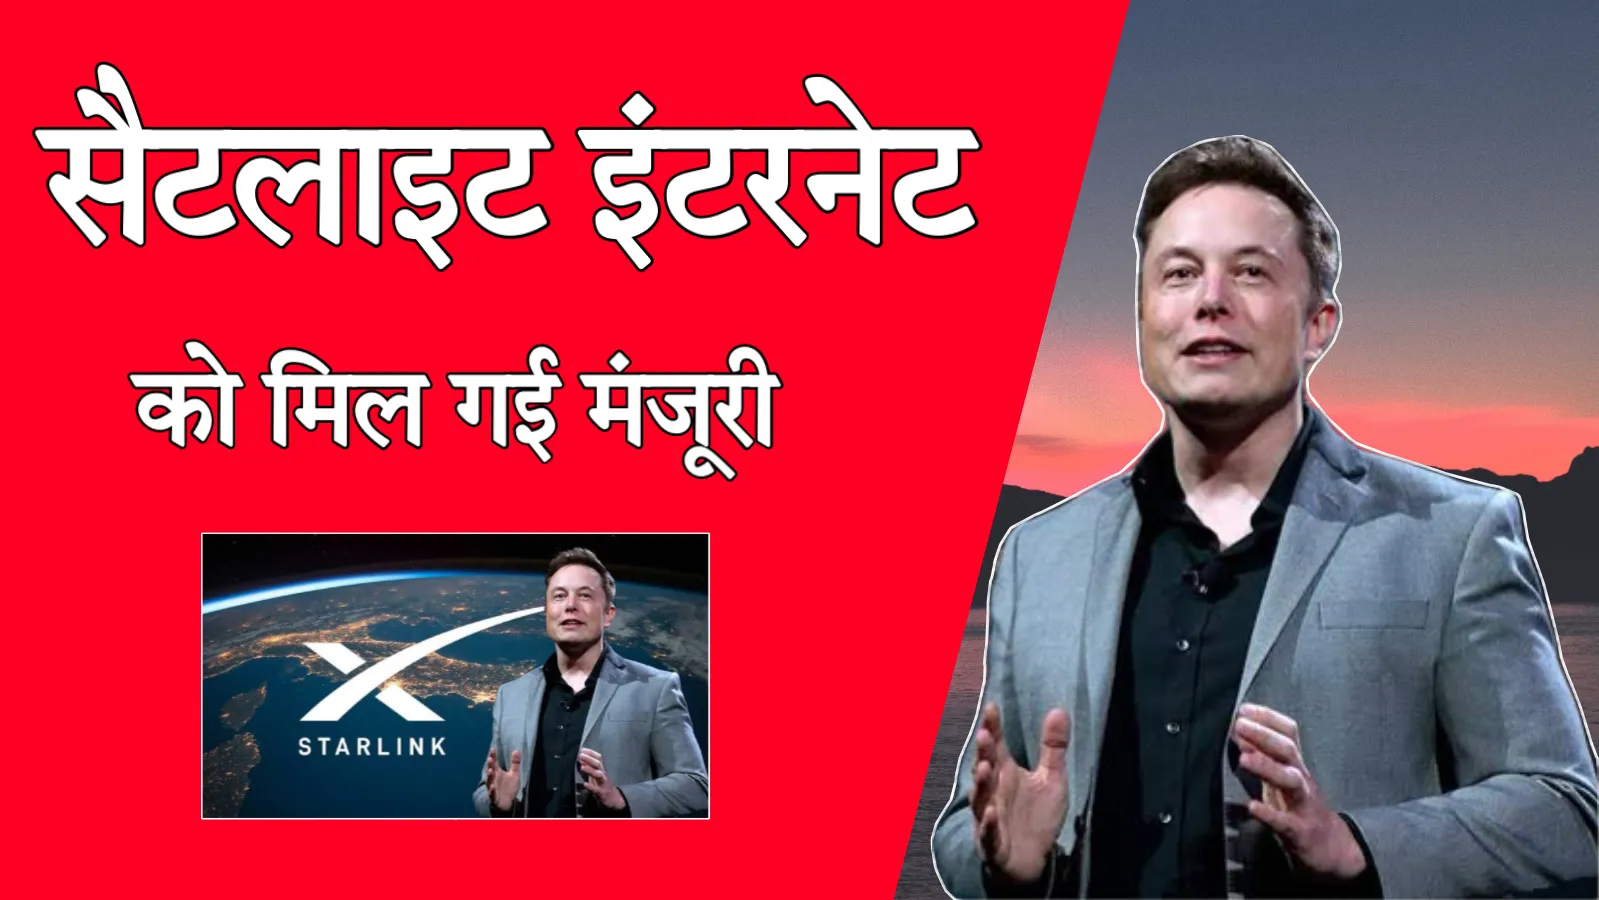 Elon Musk Starlink Internet Start